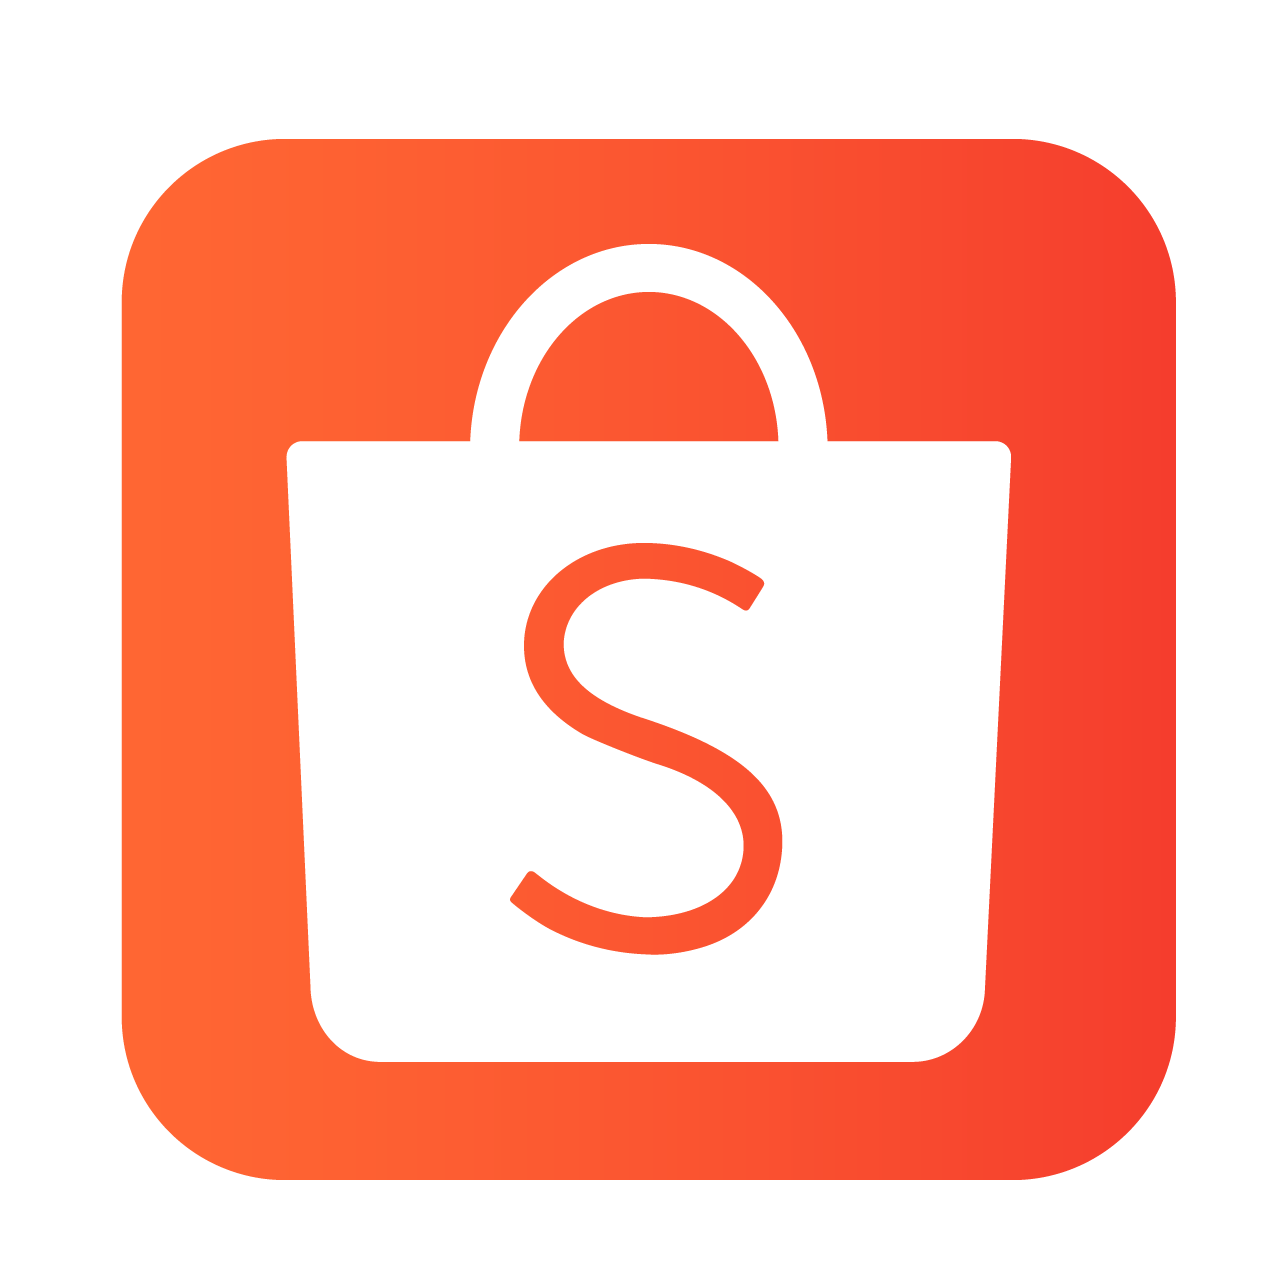  Shopee  Logo  Vector Free Download AI EPS CDR 